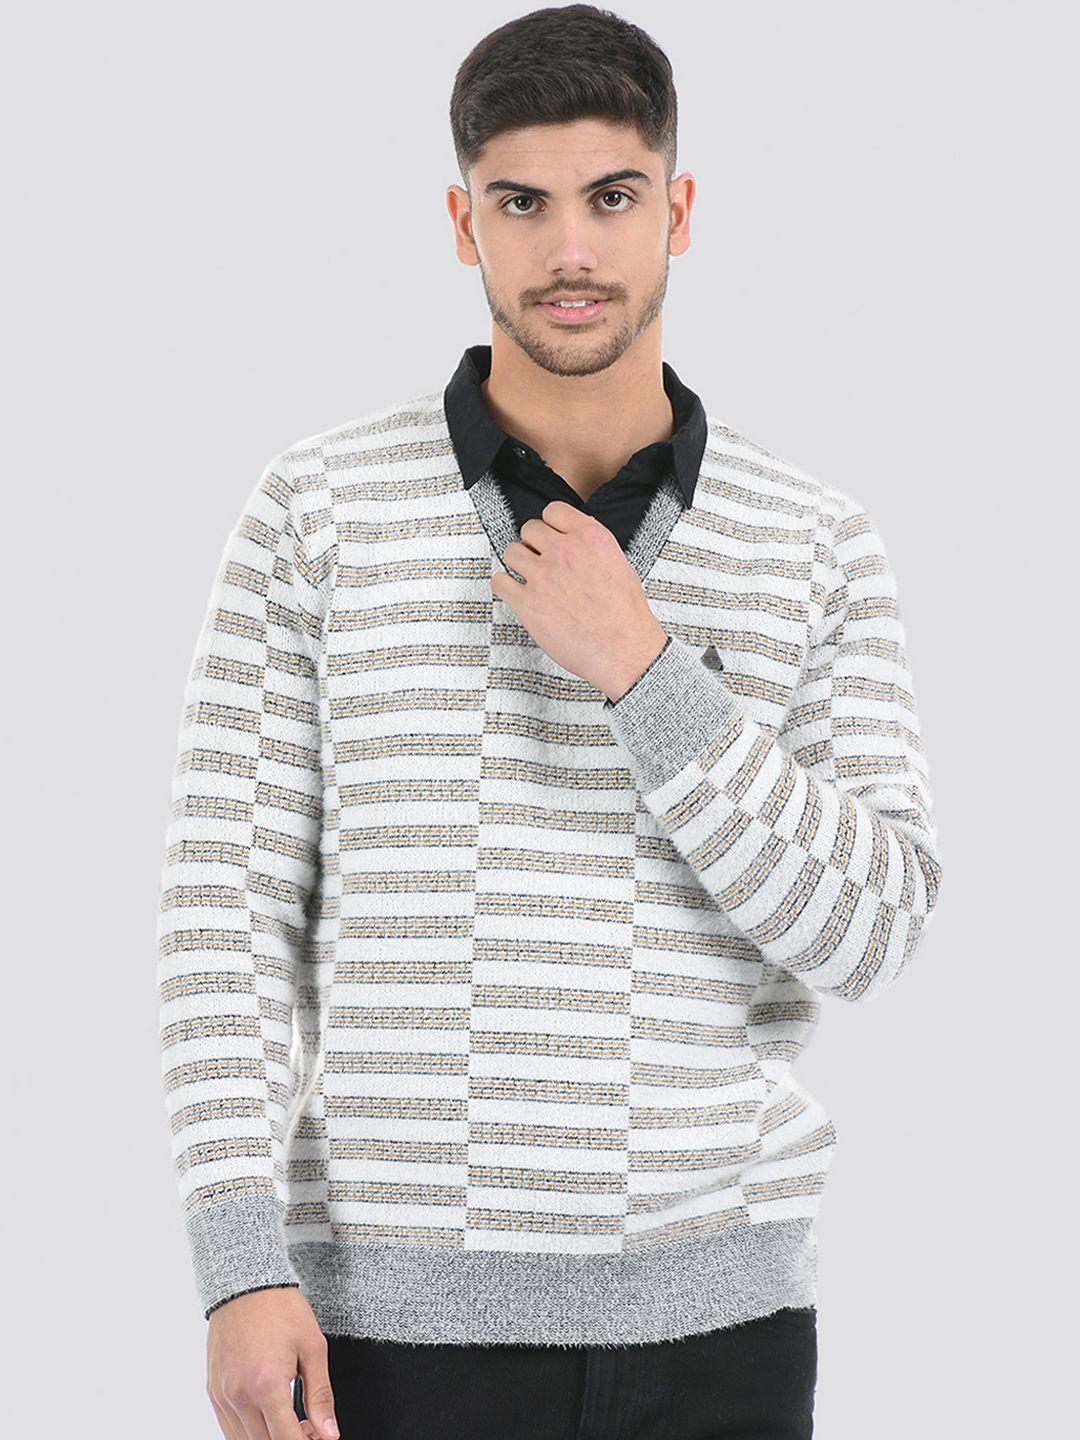 cloak & decker by monte carlo men striped acrylic pullover sweater